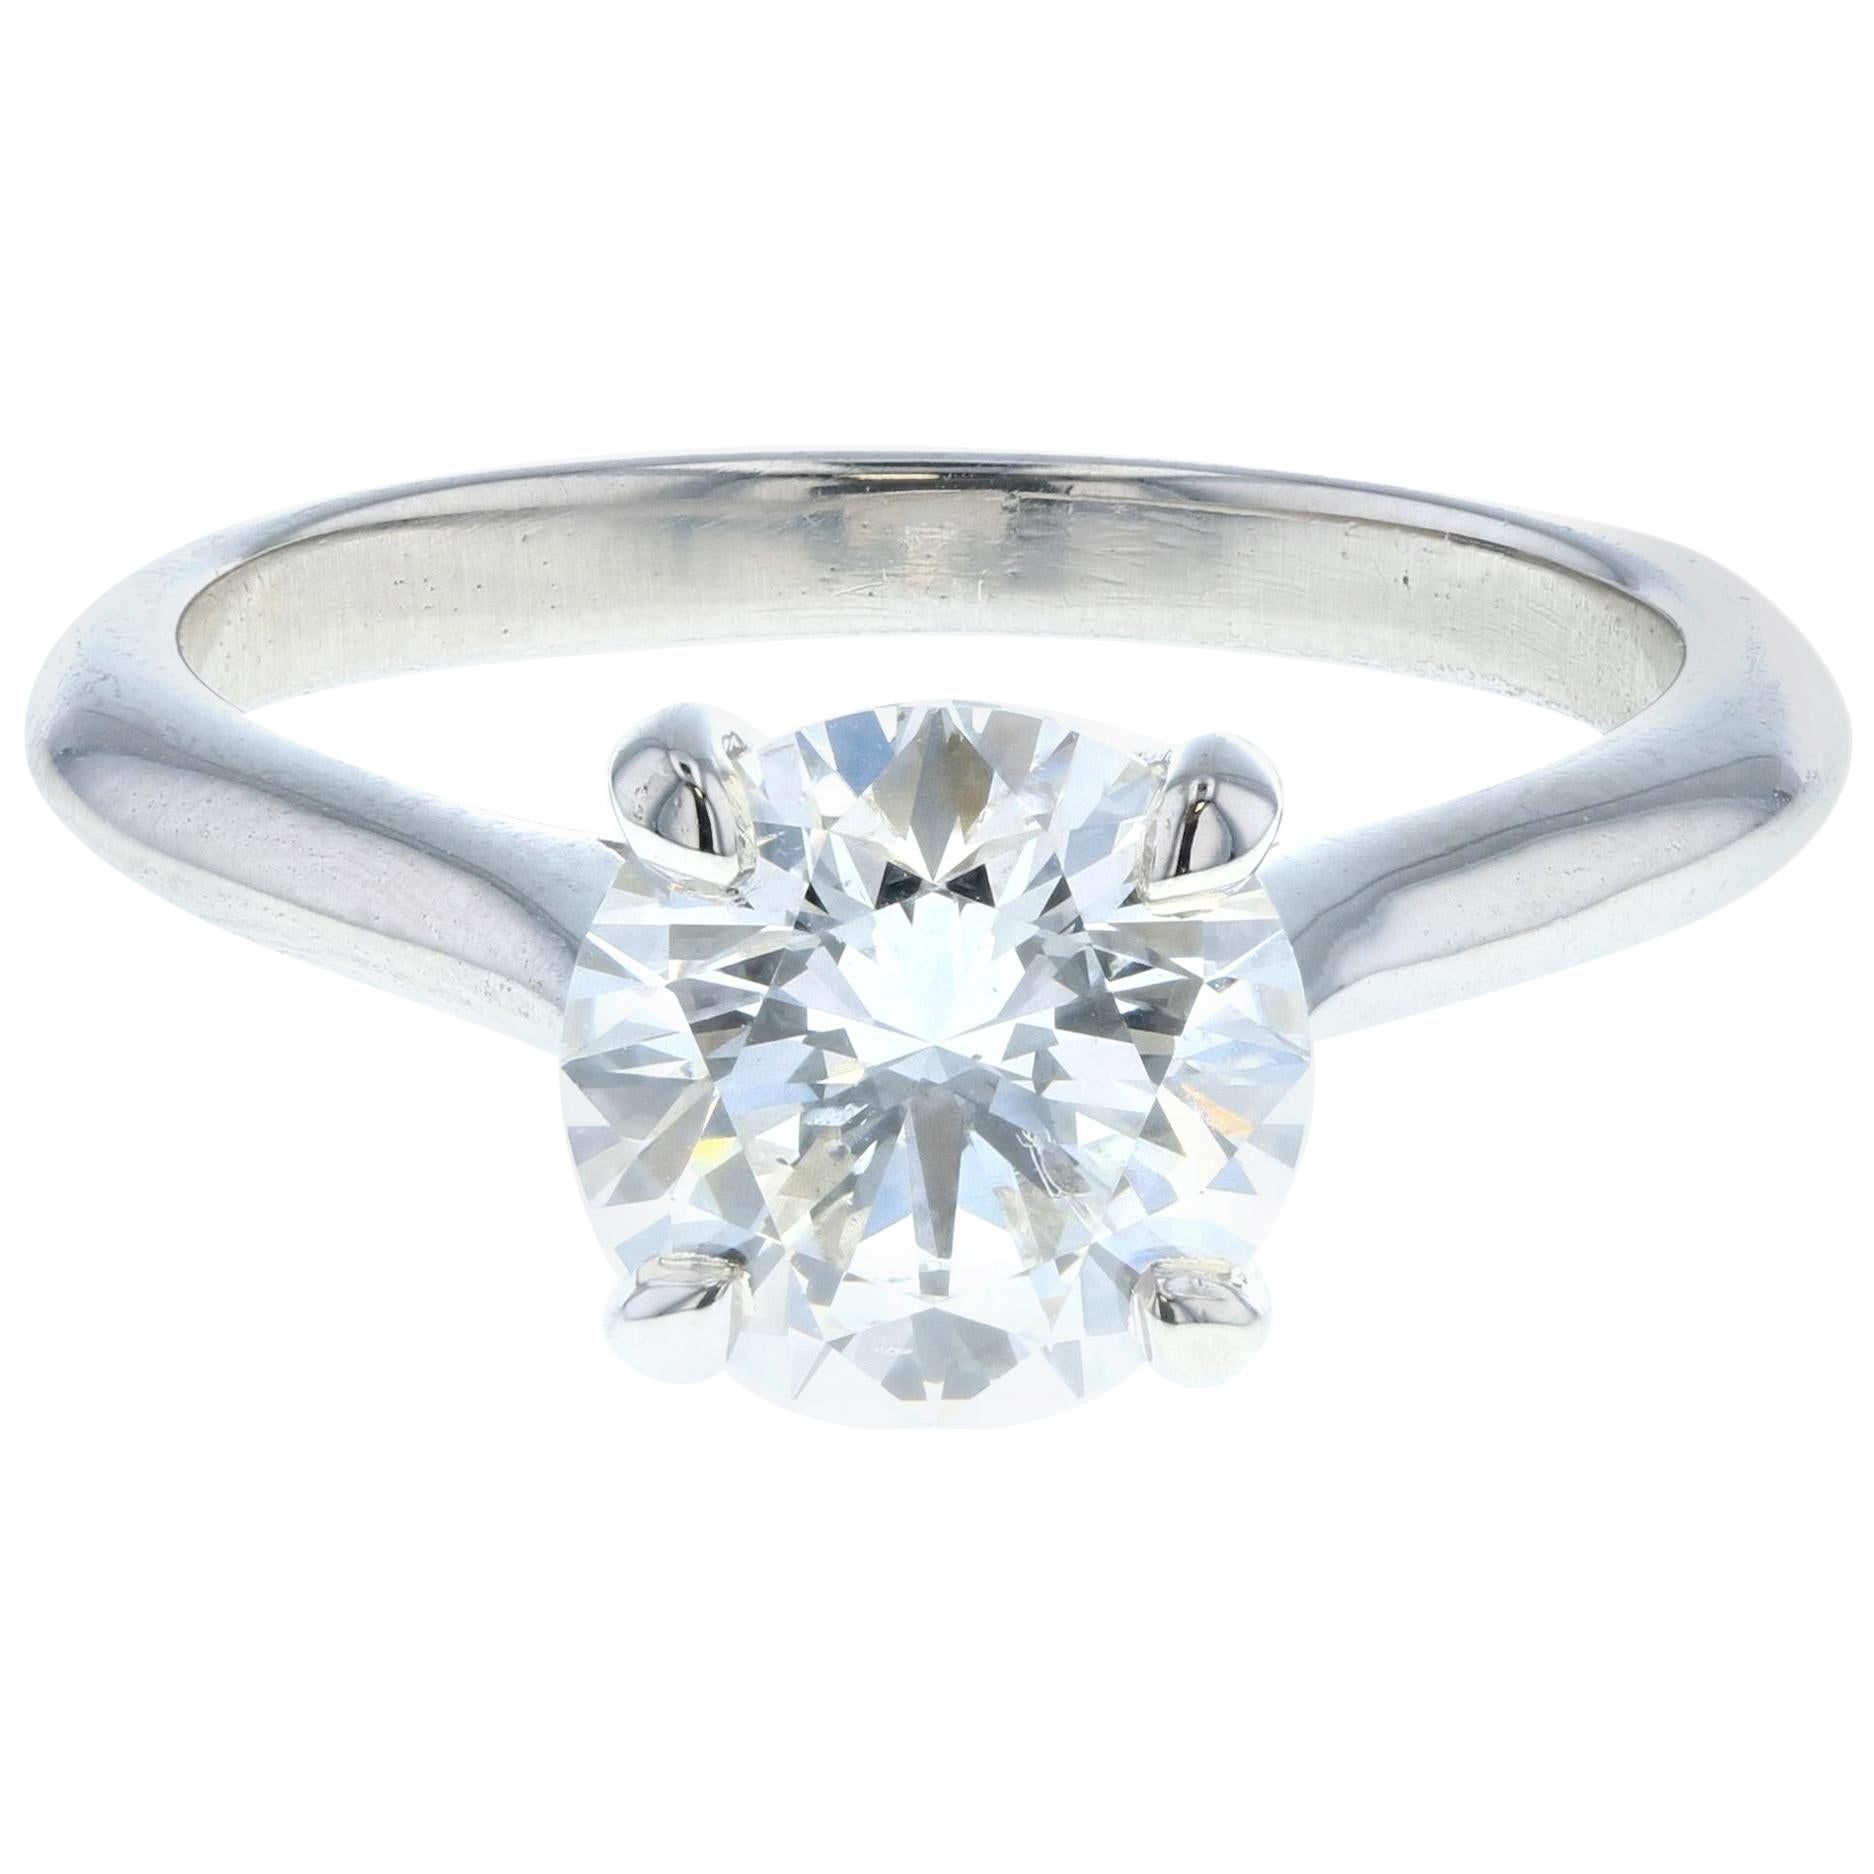 Four Prong Swooping 1.51 Carat Diamond Engagement Ring in Platinum GIA